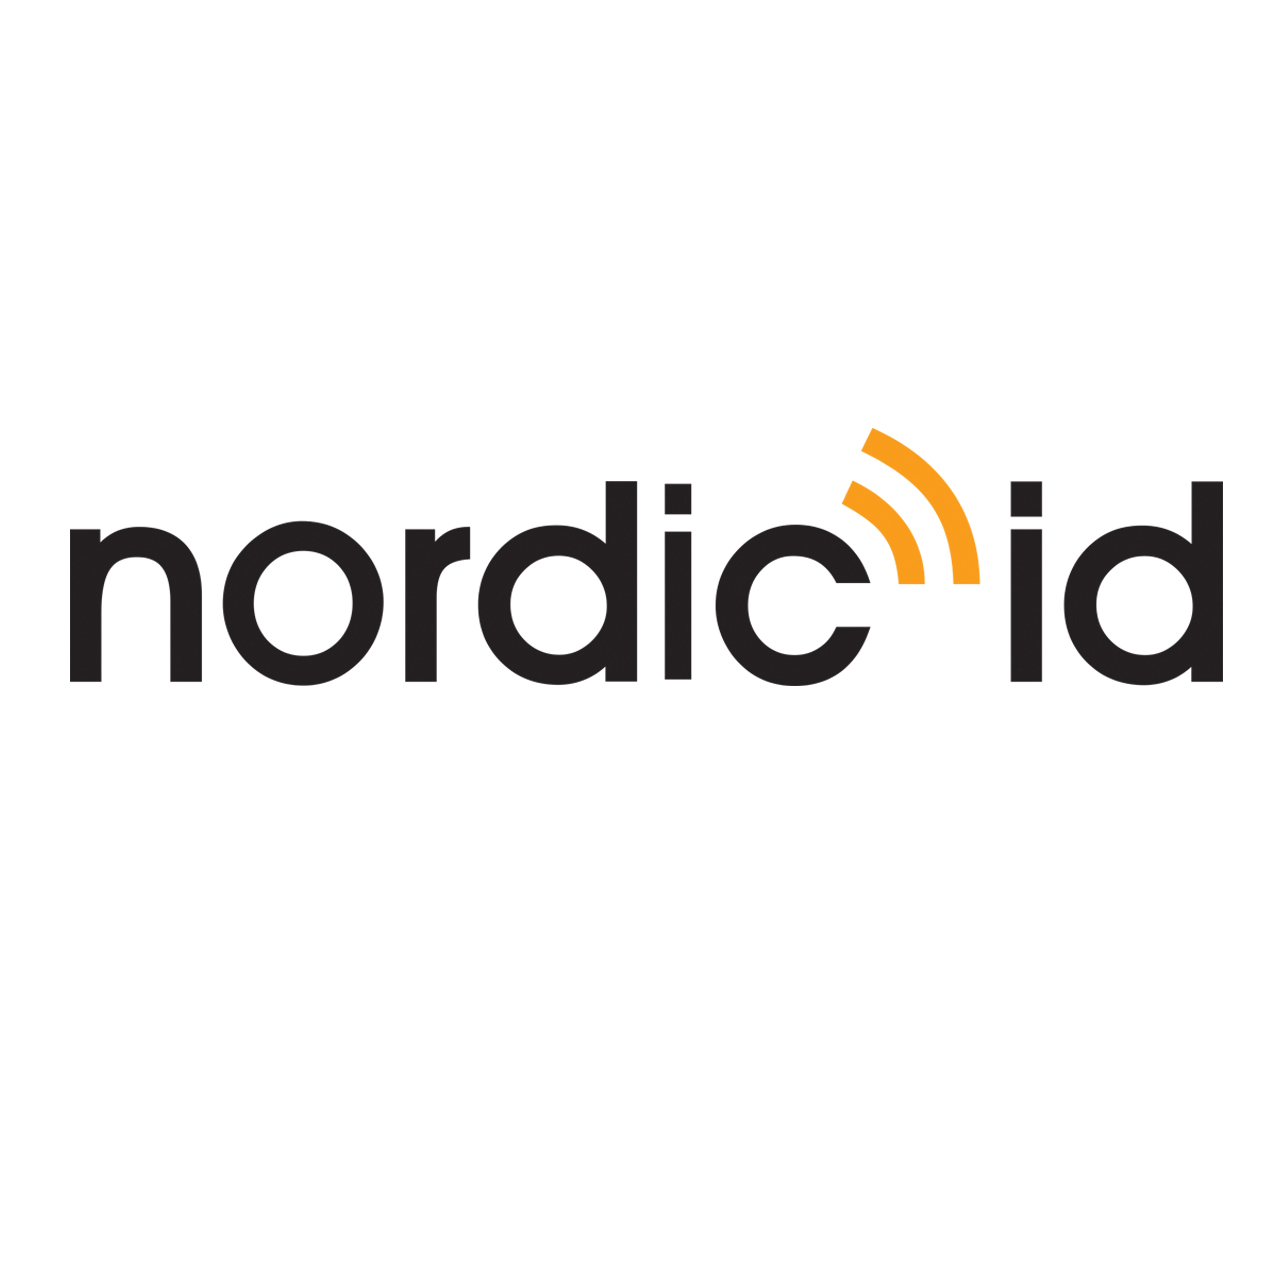  - Nordic ID